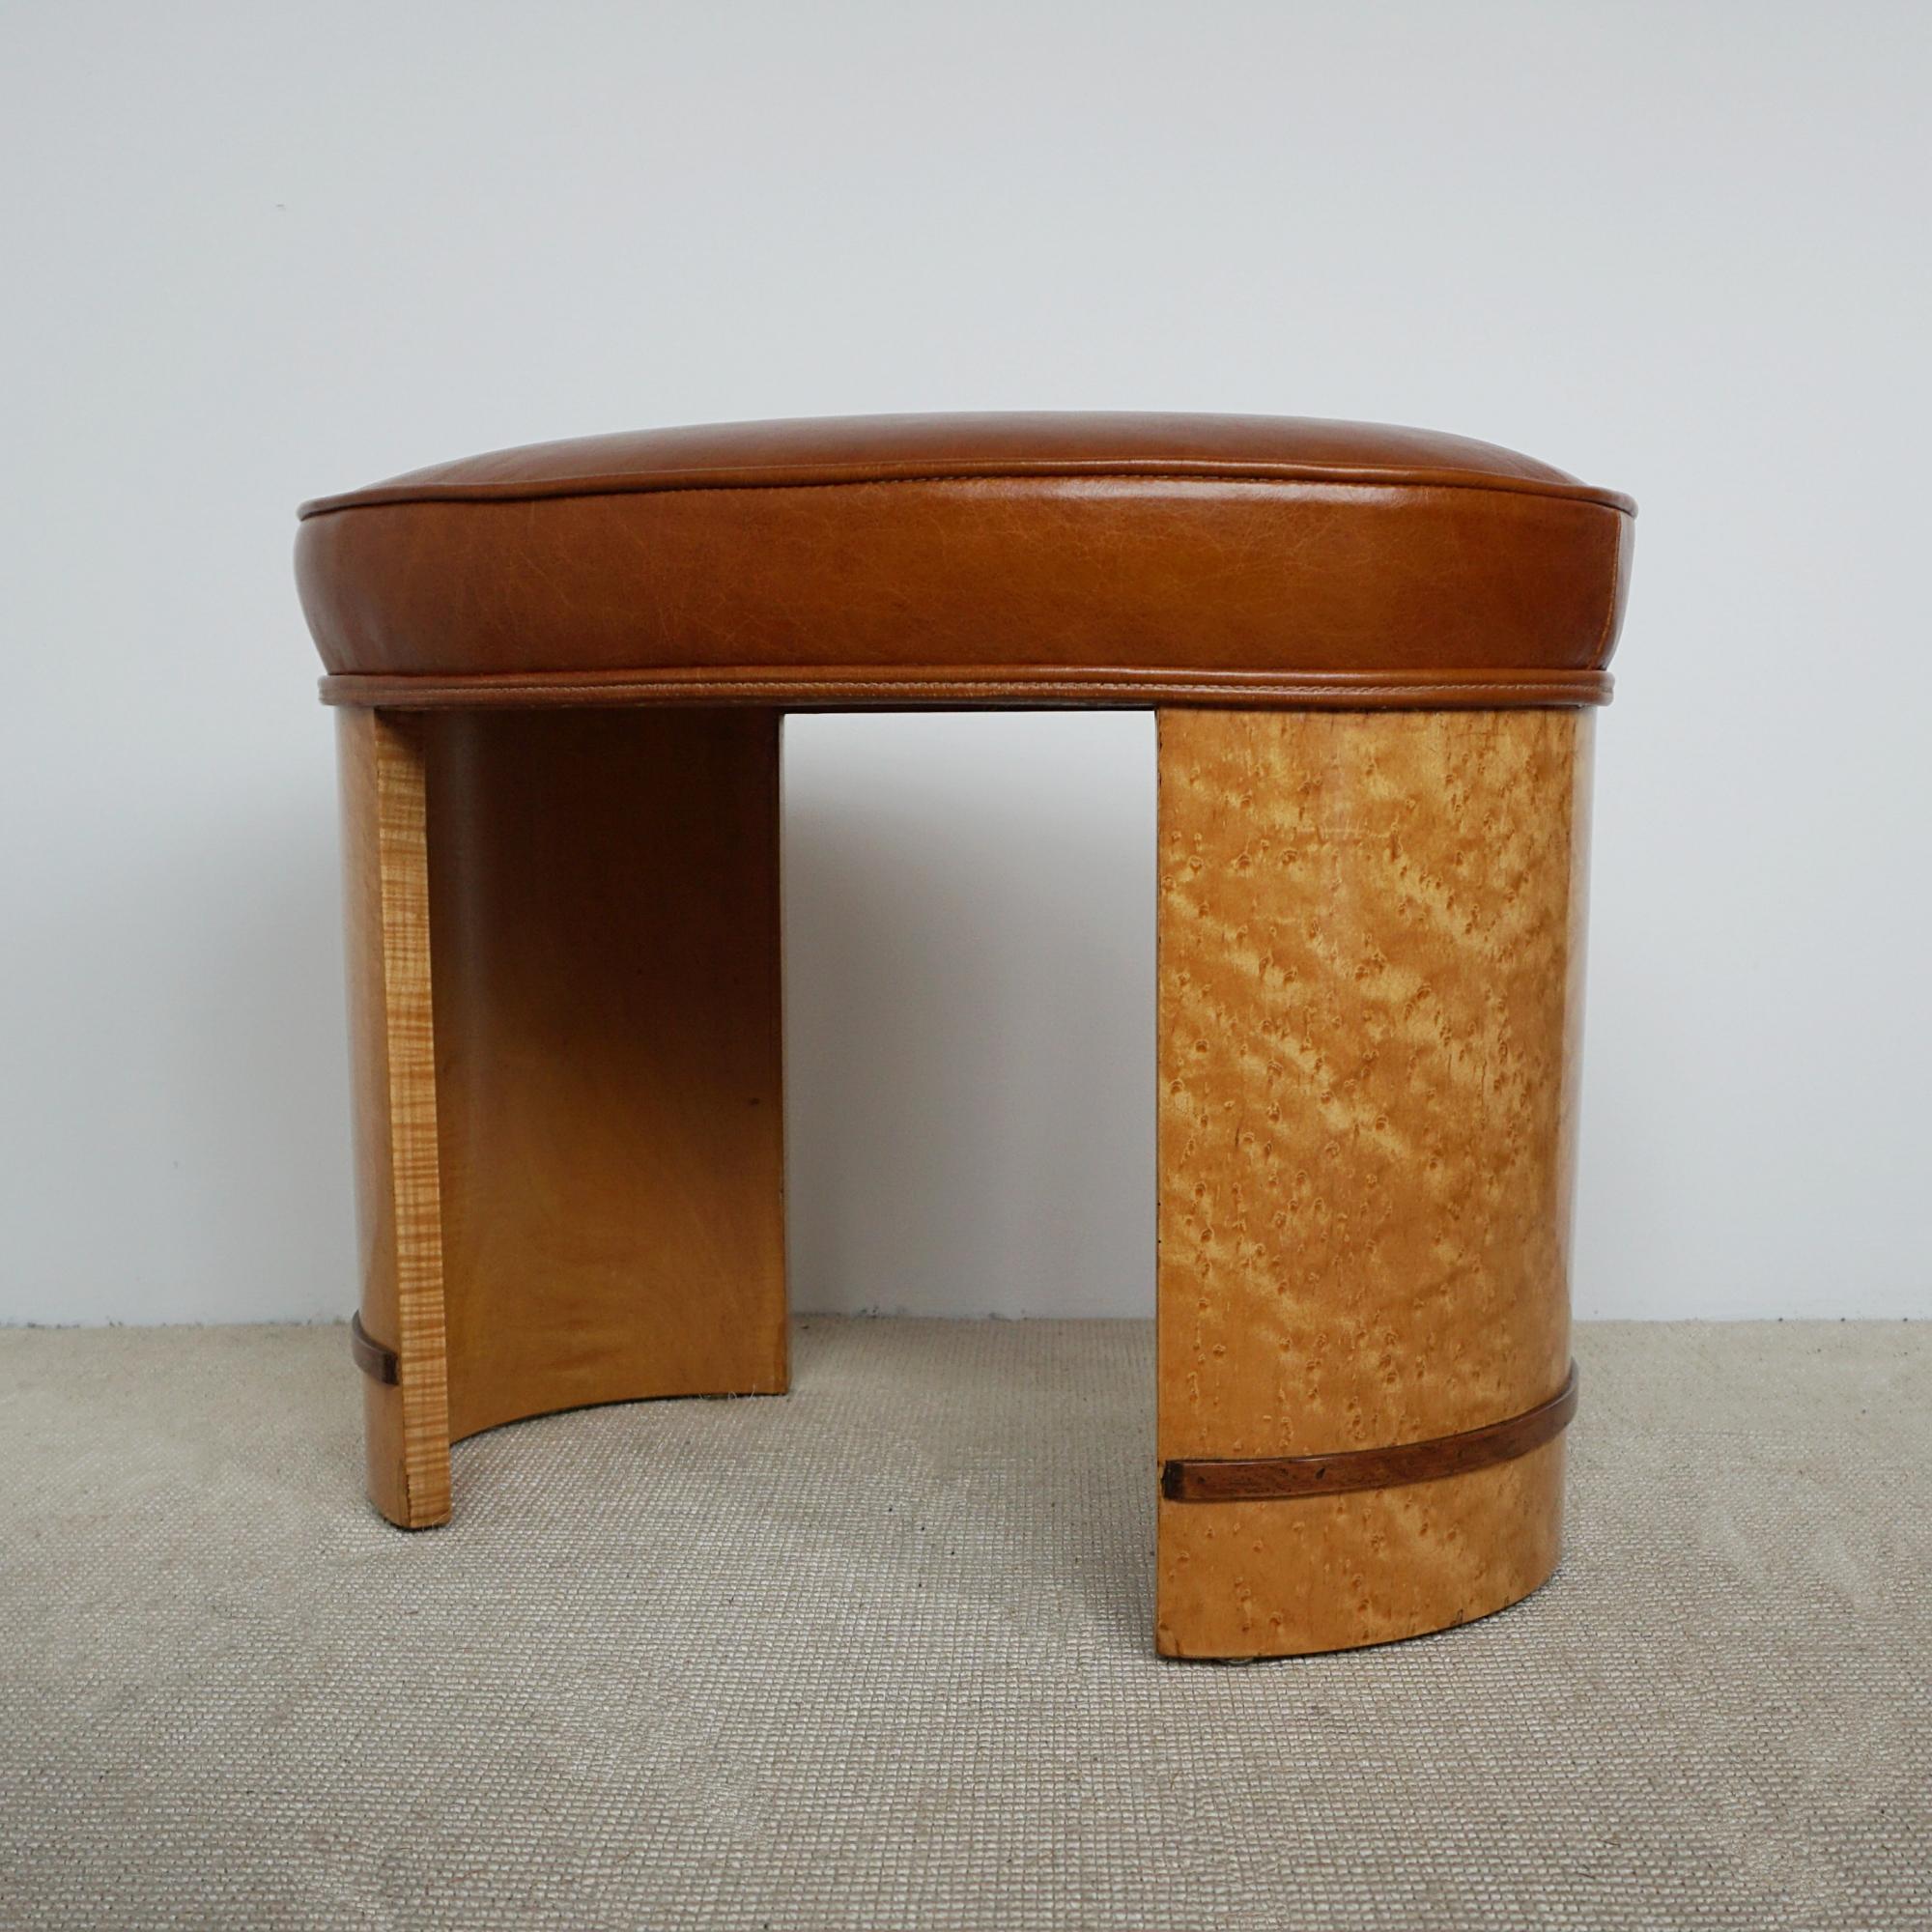 English Art Deco Birdseye Maple Veneered Stool With Brown Leather Re-upholstery